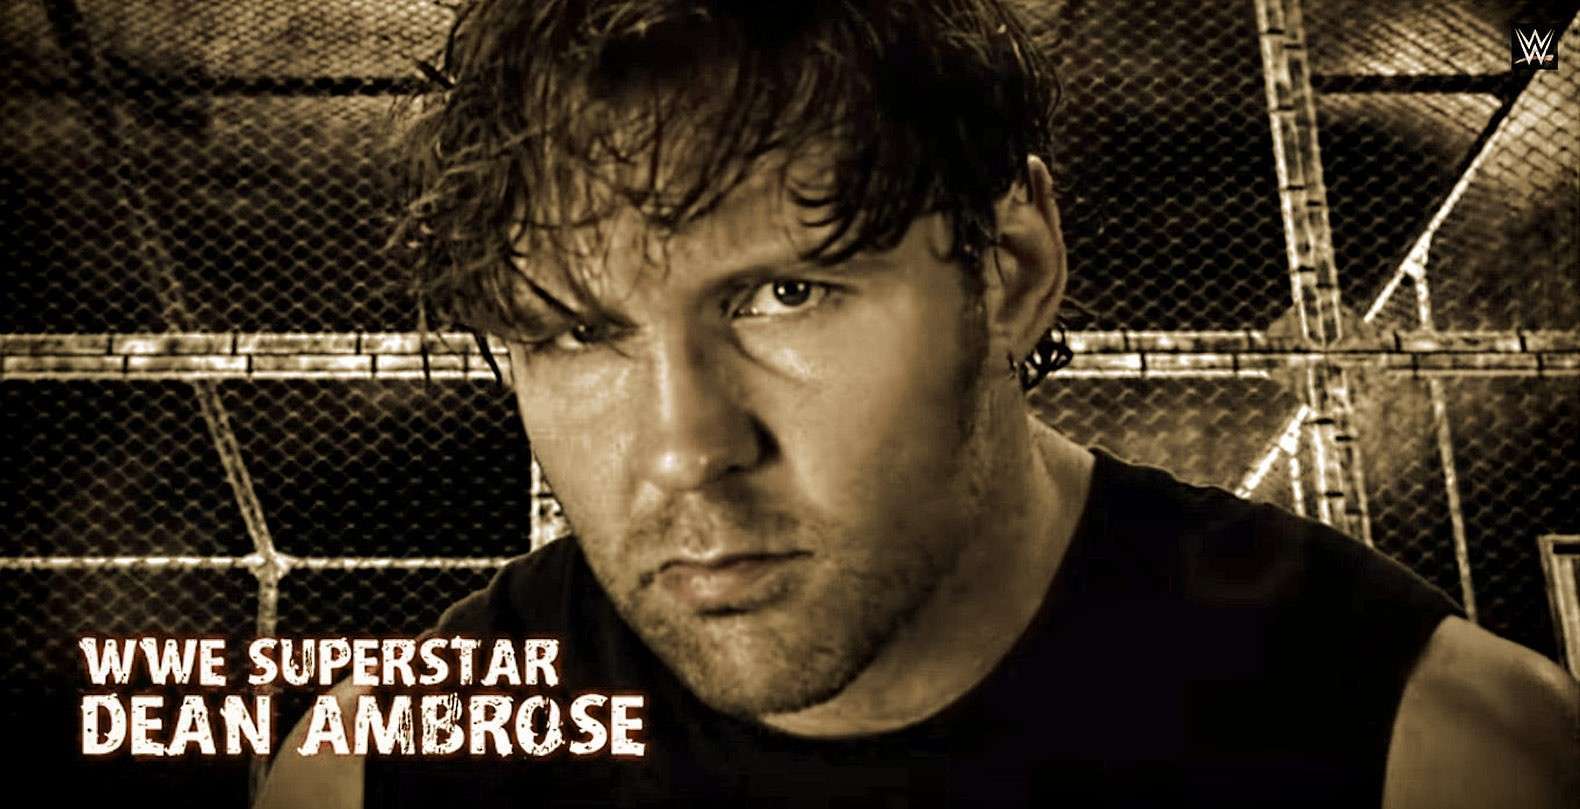 WWE Dean Ambrose HD Wallpaper Download New Image Free